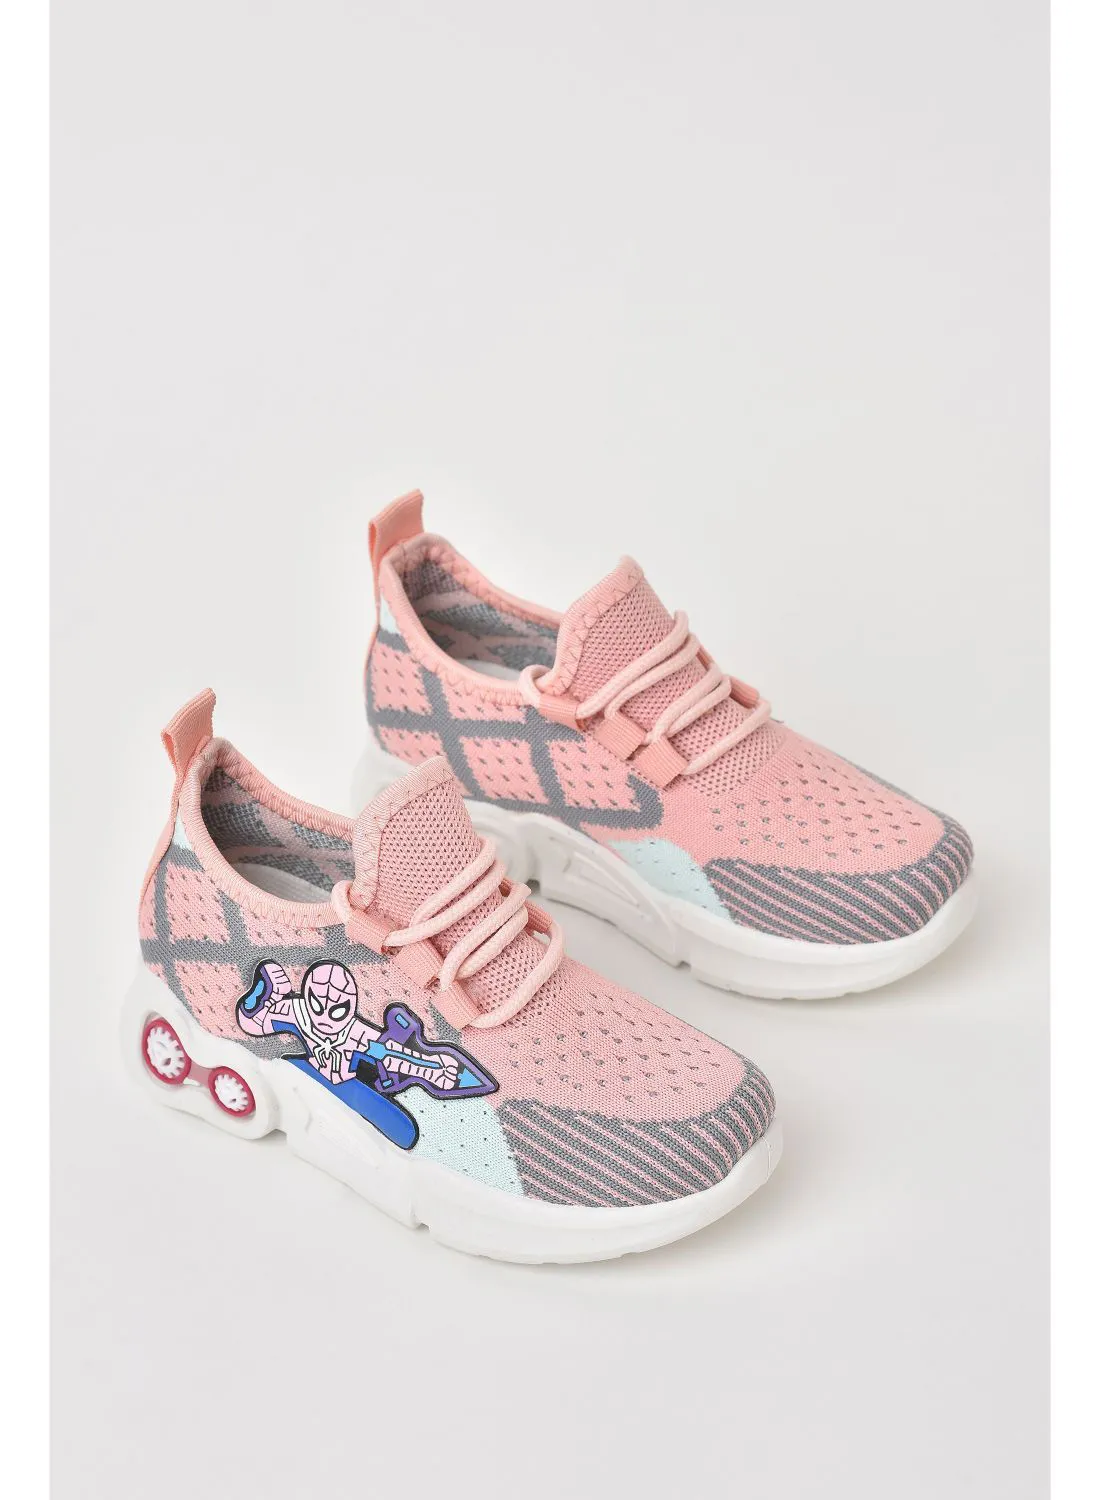 QUWA Casual Sneaker Pink/Grey